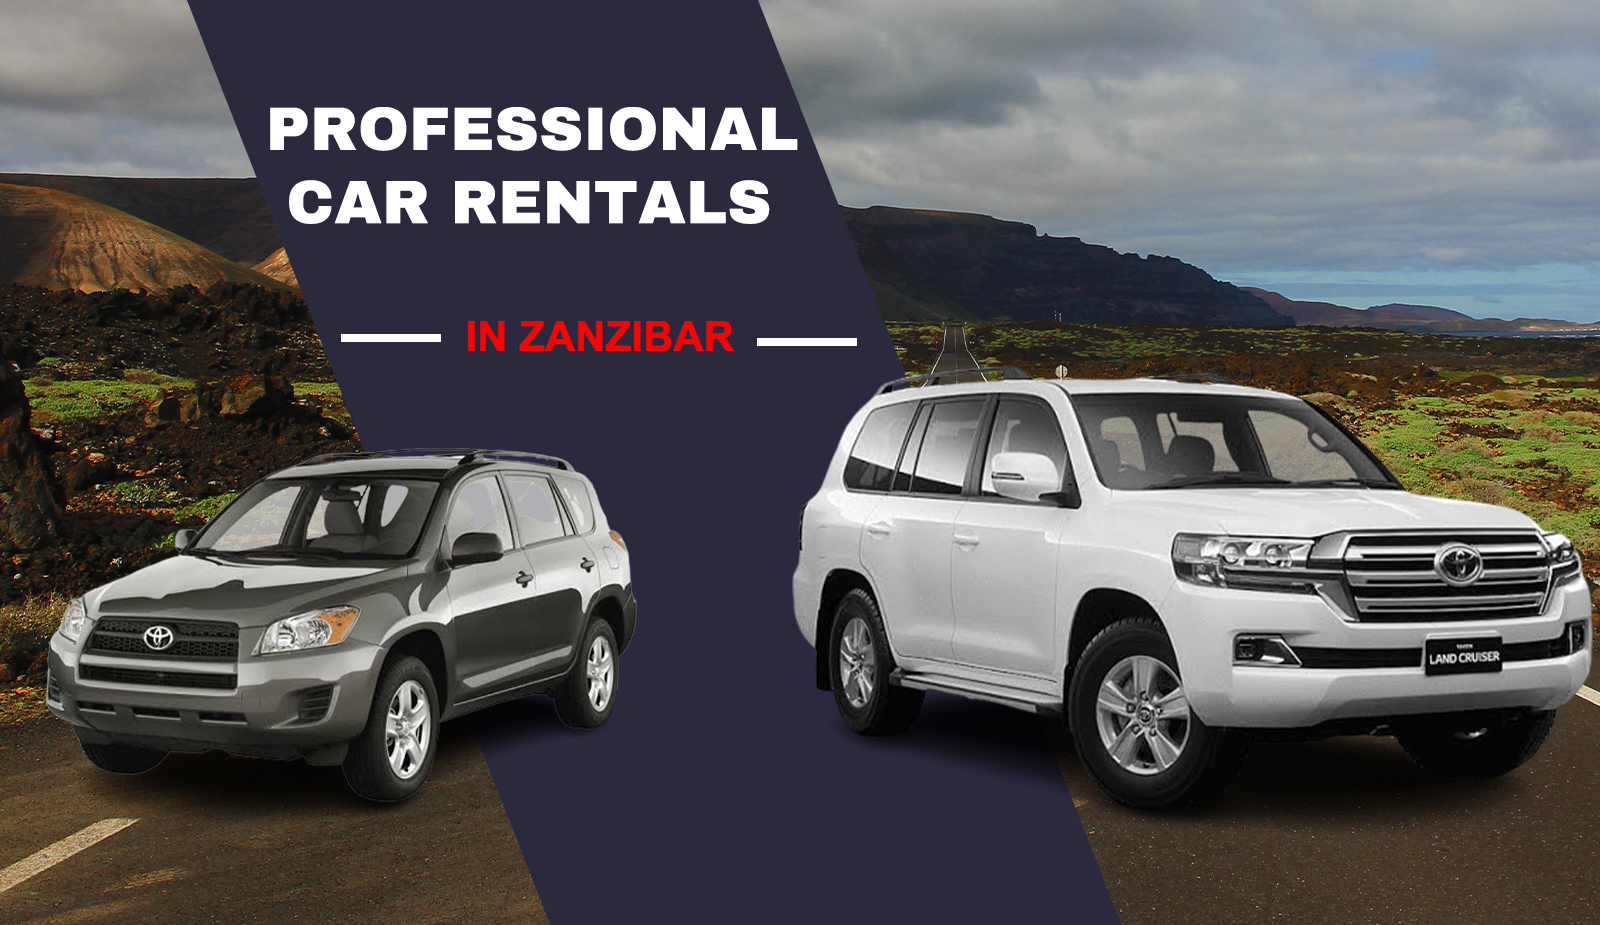 The Best car rentals service in zanzibar